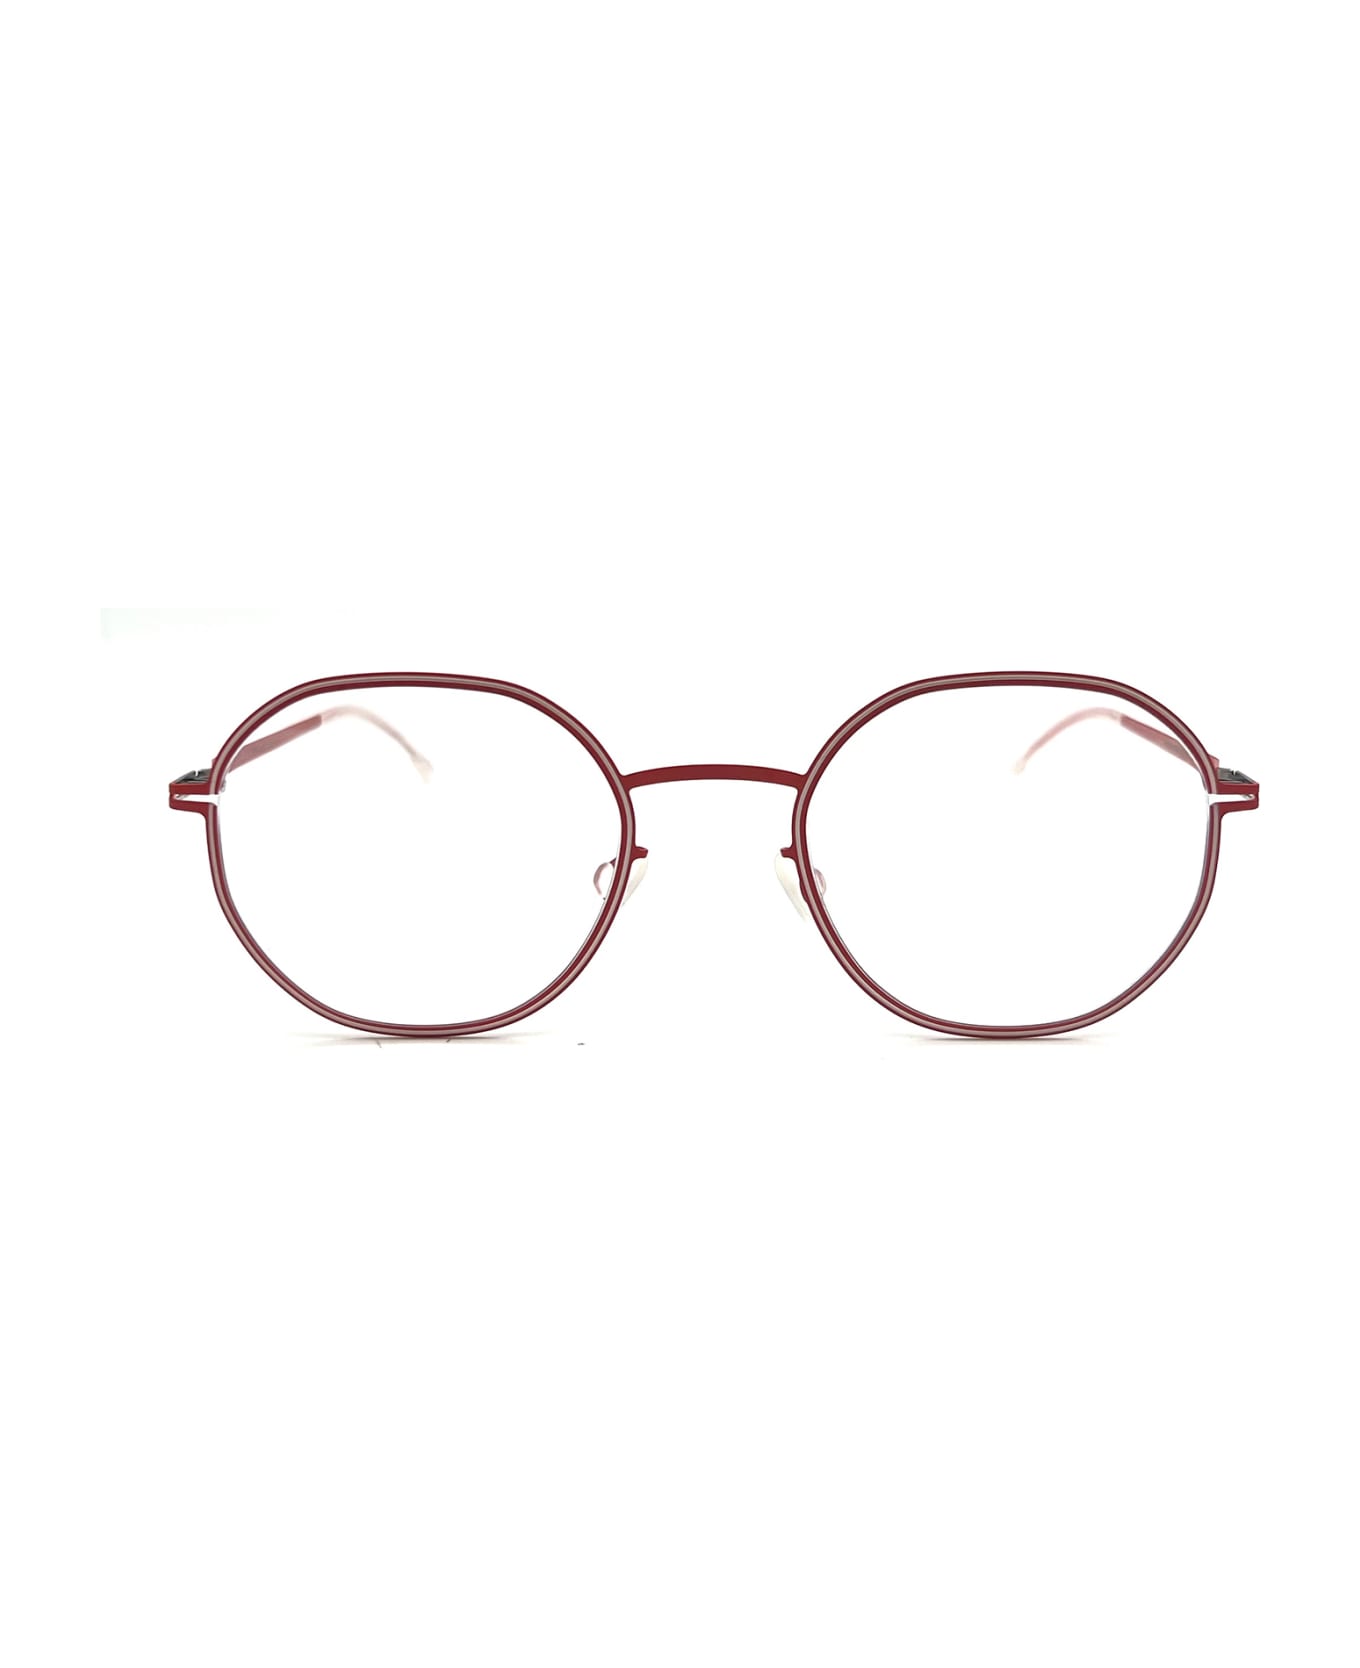 Mykita STUDIO 6.6 Eyewear - Rusty Red/aurore